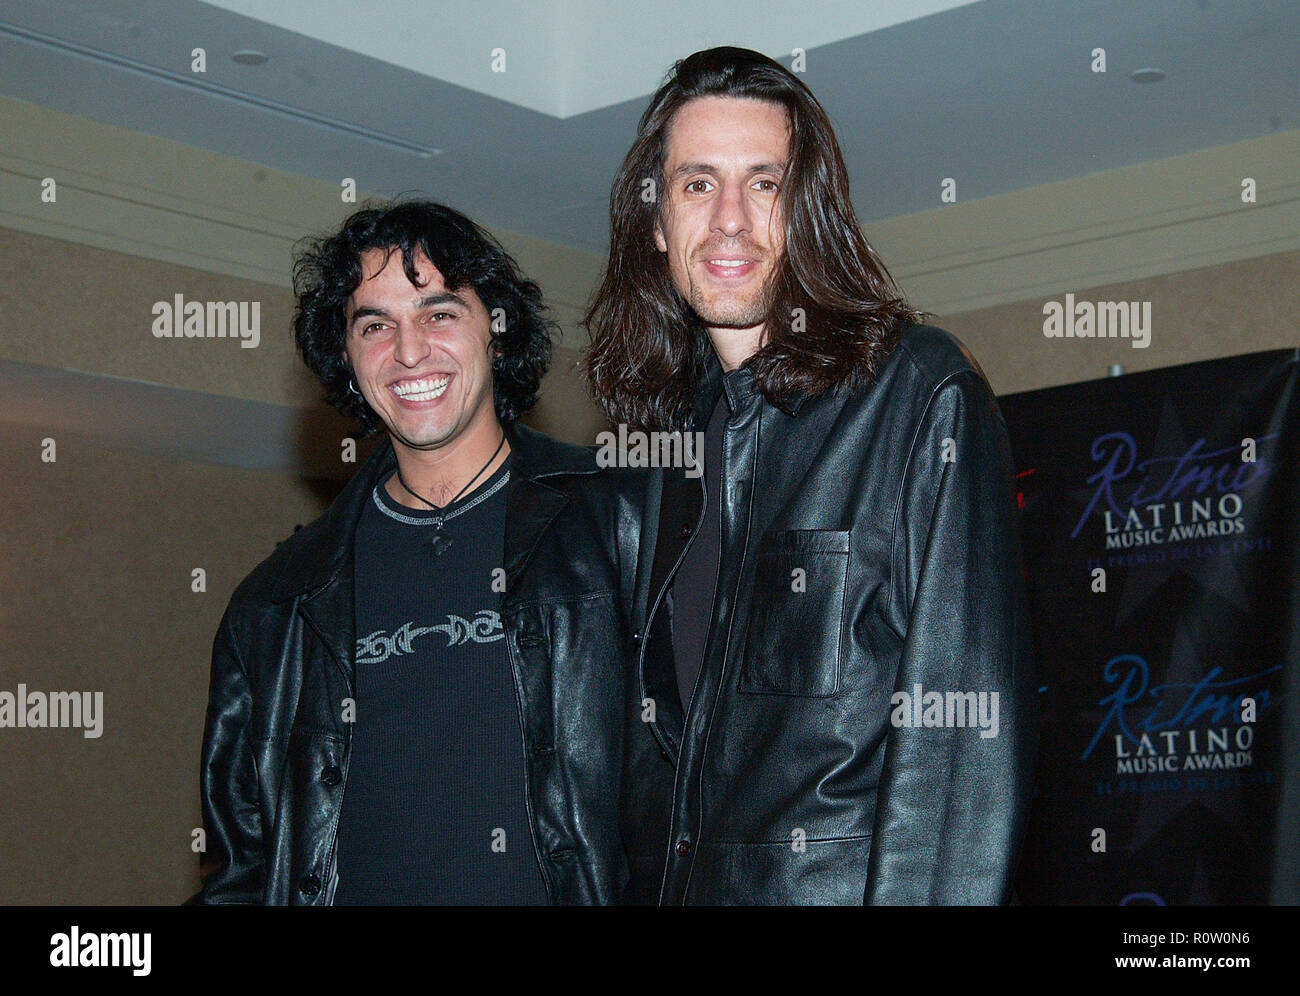 Santino et Walter della Torre (Gruppo Liquido) en coulisses à la Ritmo Latino Music Awards 2002 au Kodak Theatre de Los Angeles. Le 25 octobre 2002. Banque D'Images